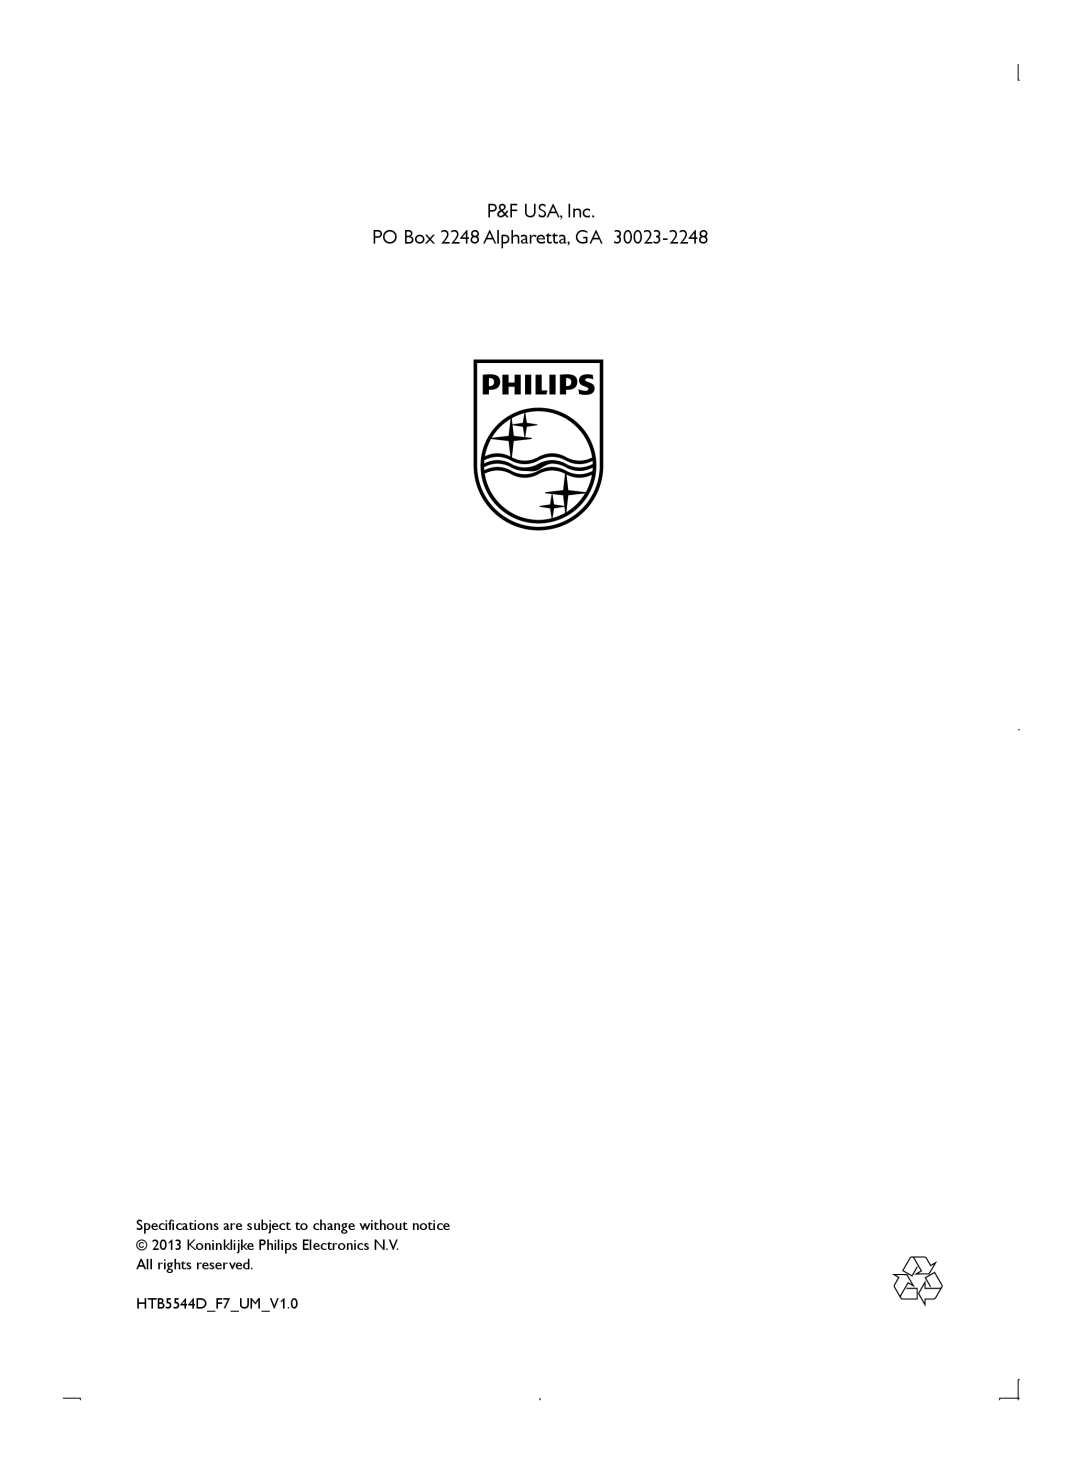 Philips manuel dutilisation P&F USA, Inc PO Box 2248 Alpharetta, GA, All rights reserved HTB5544D F7 UM 